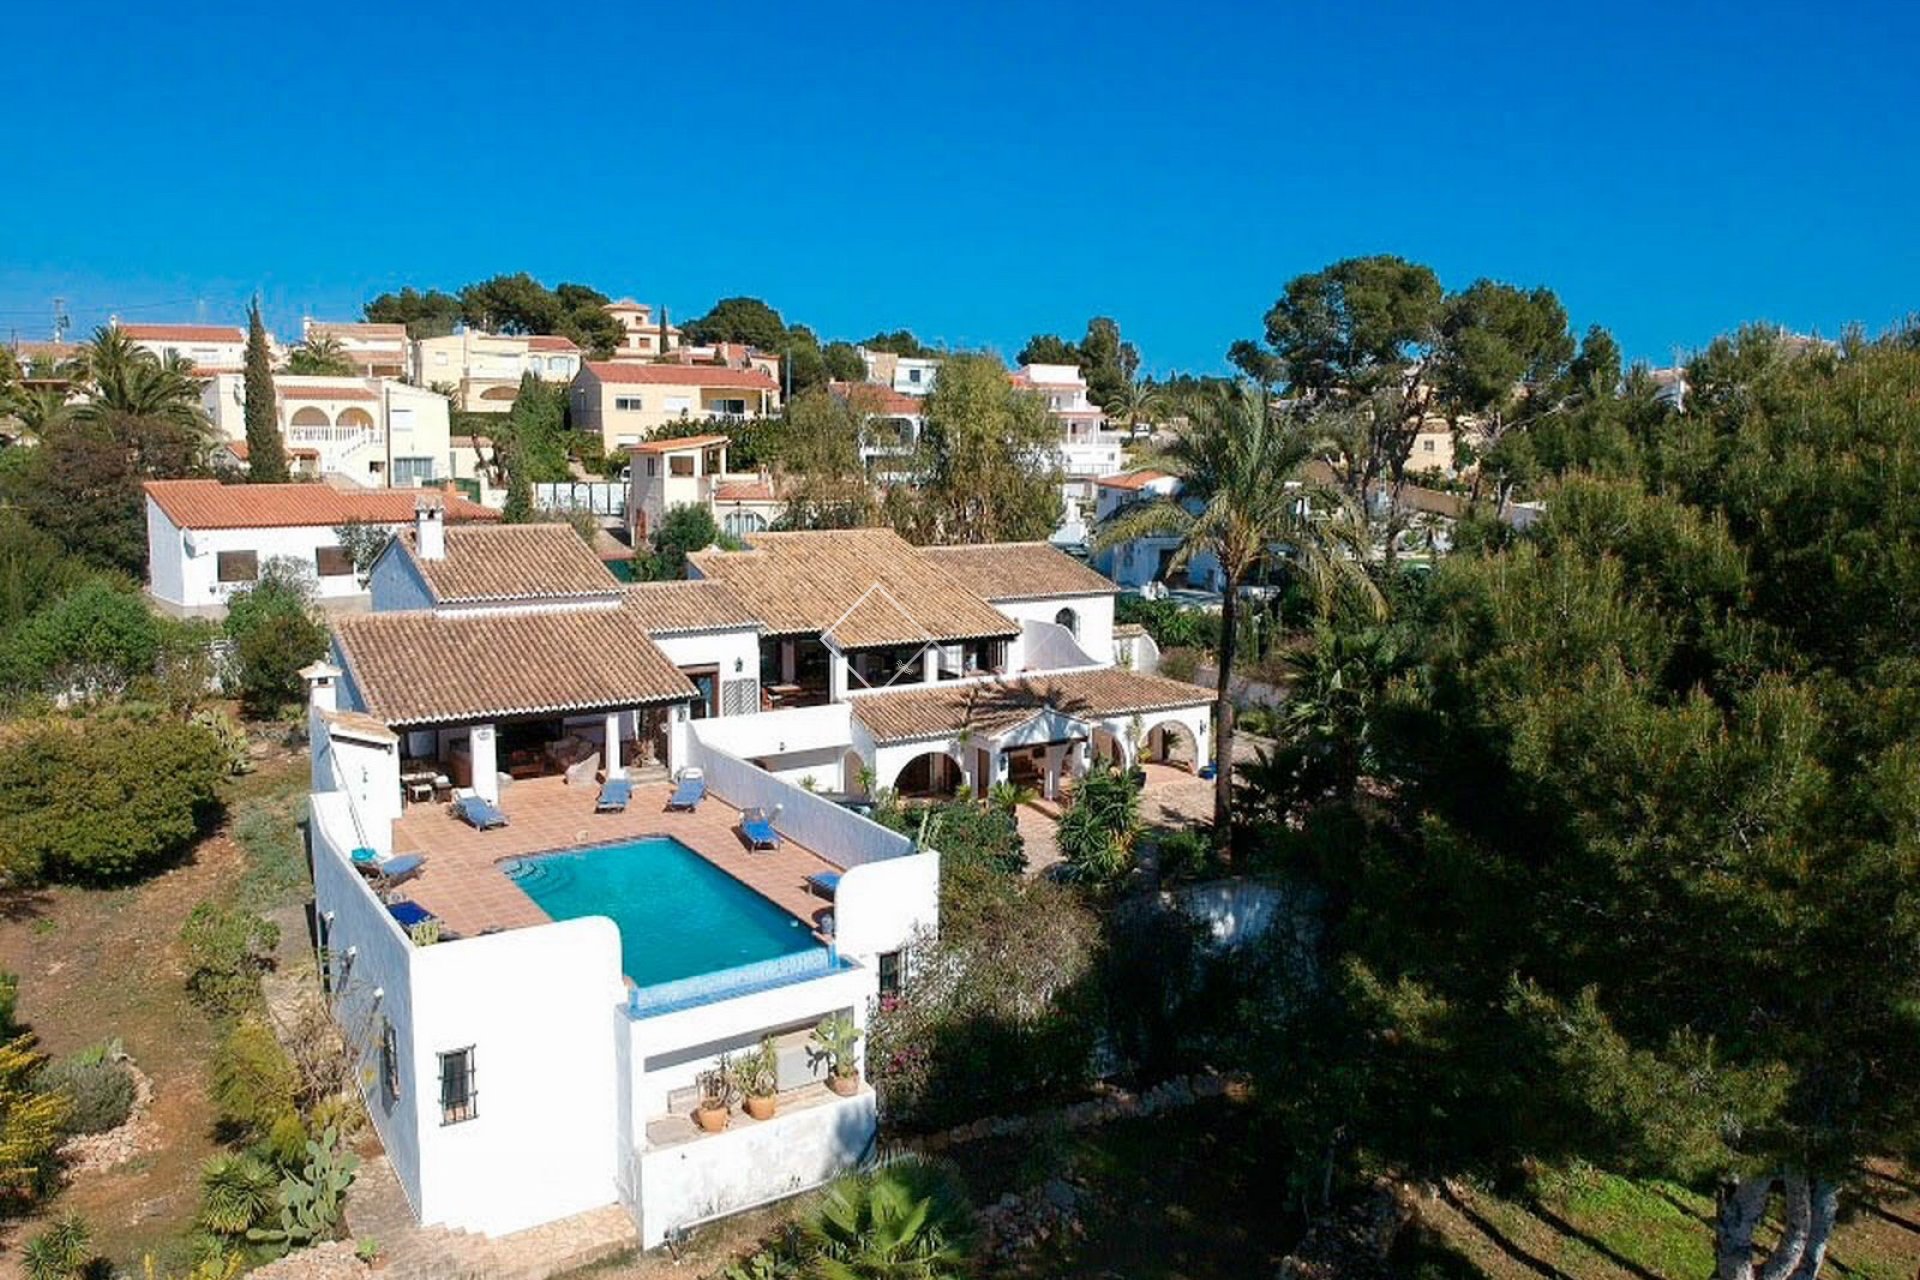 Huge rustic villa for sale in Calpe